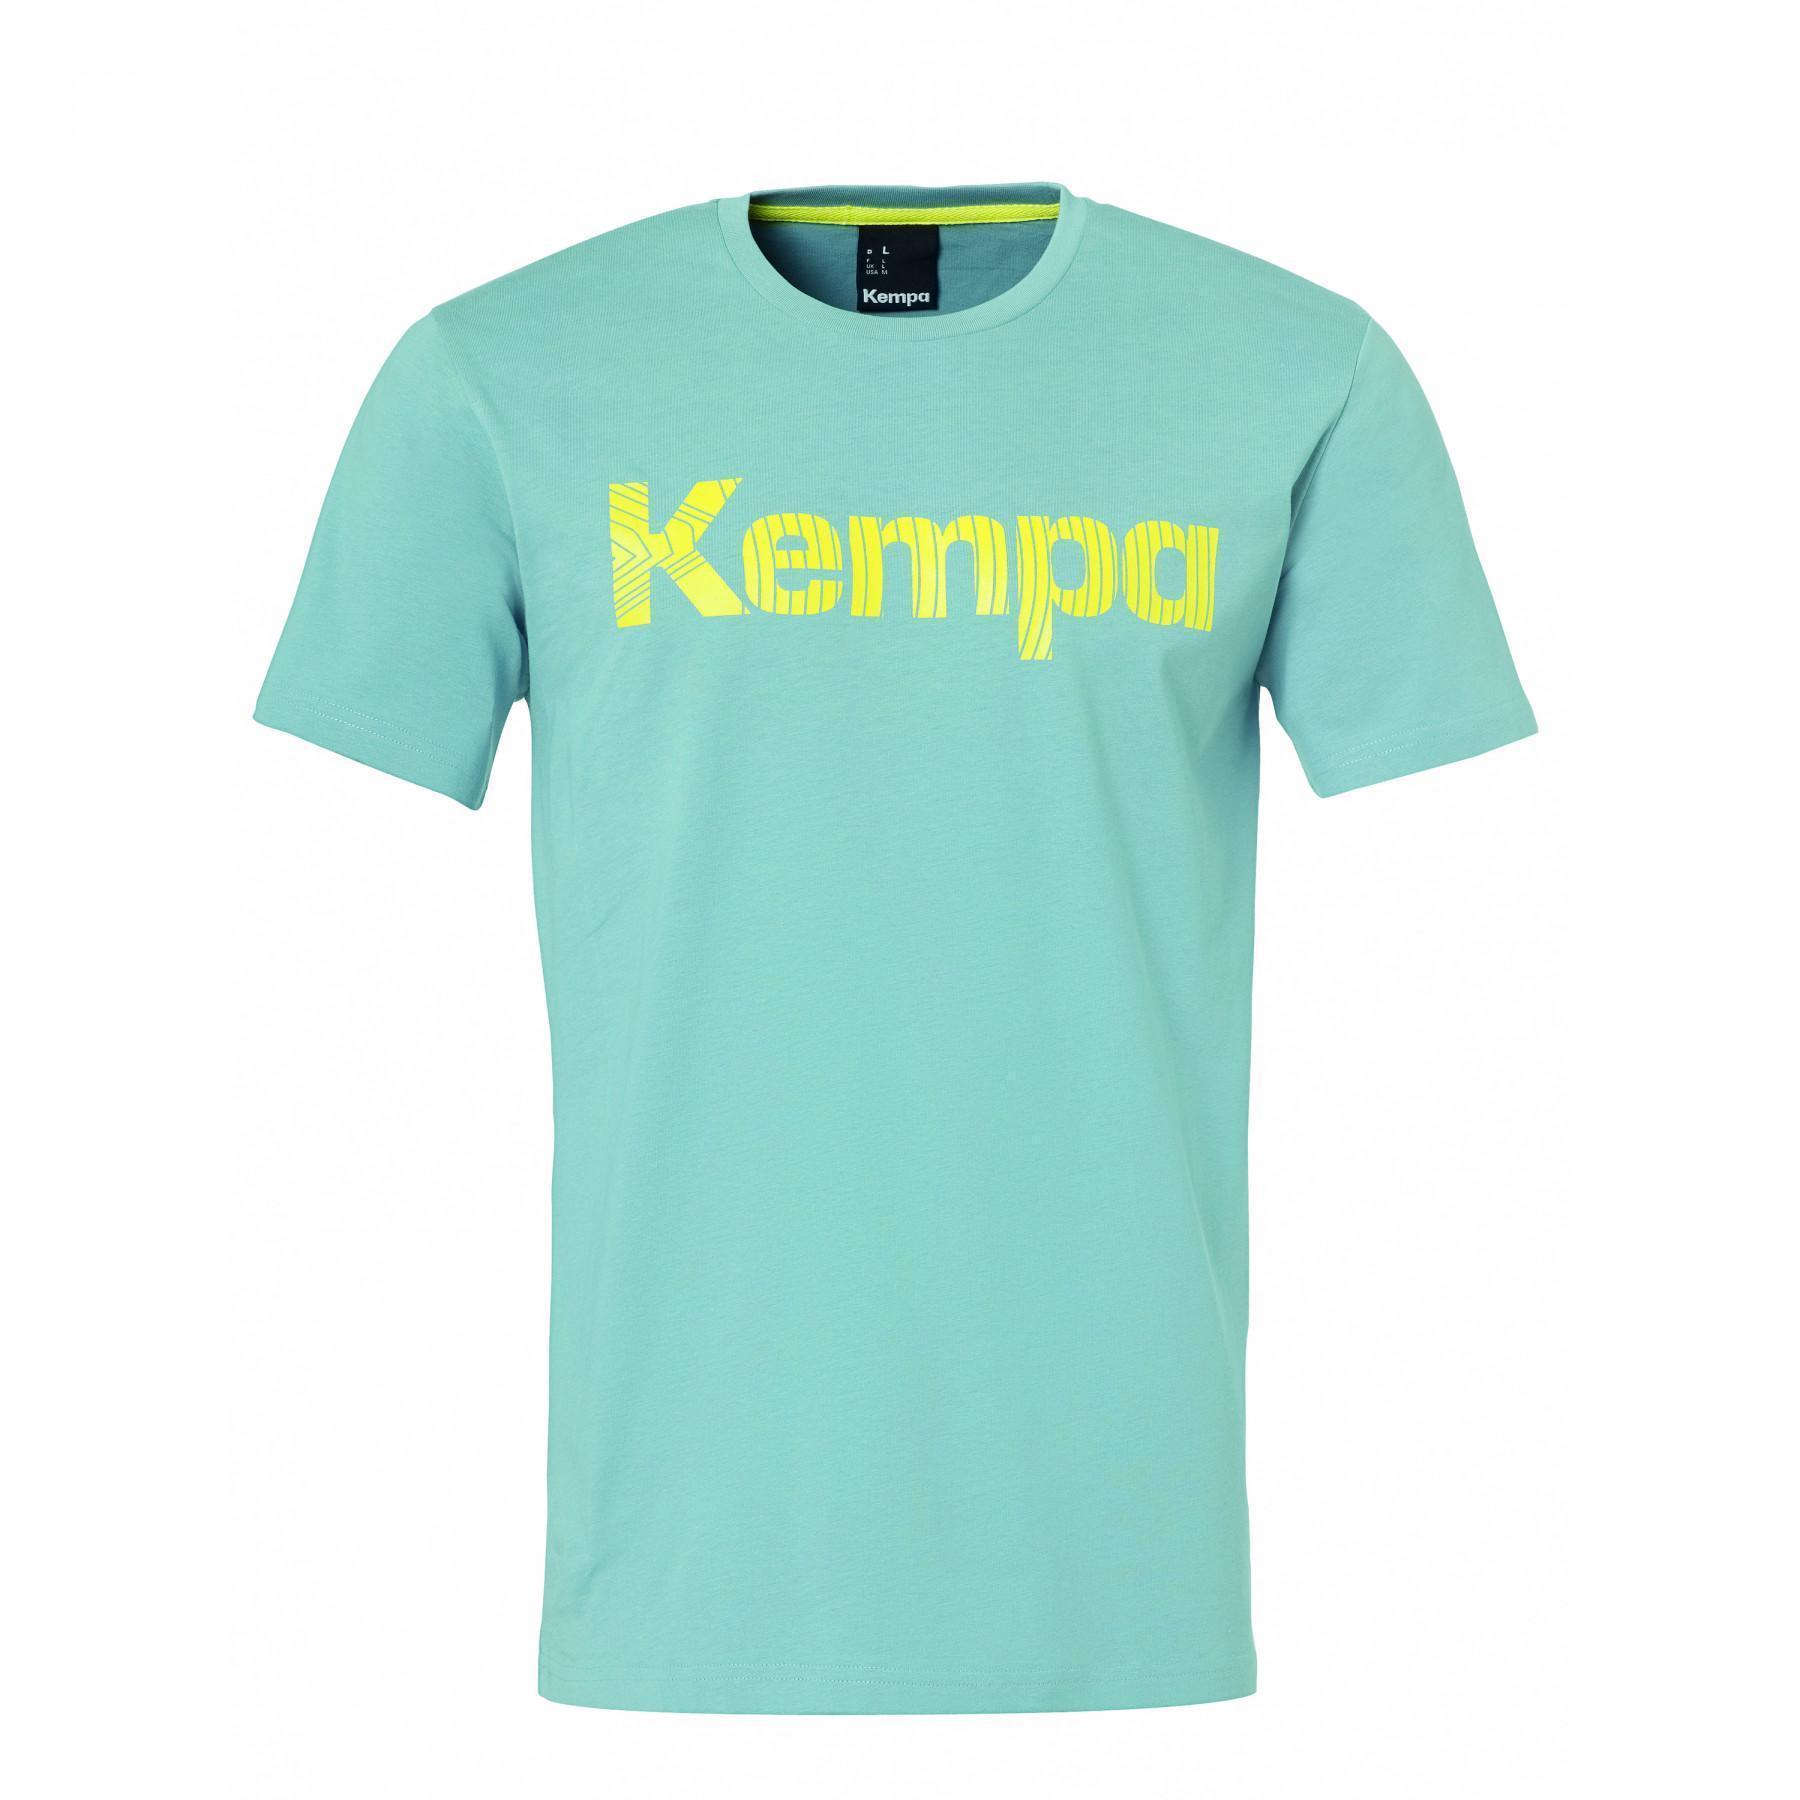 T-shirt Graphic Kempa